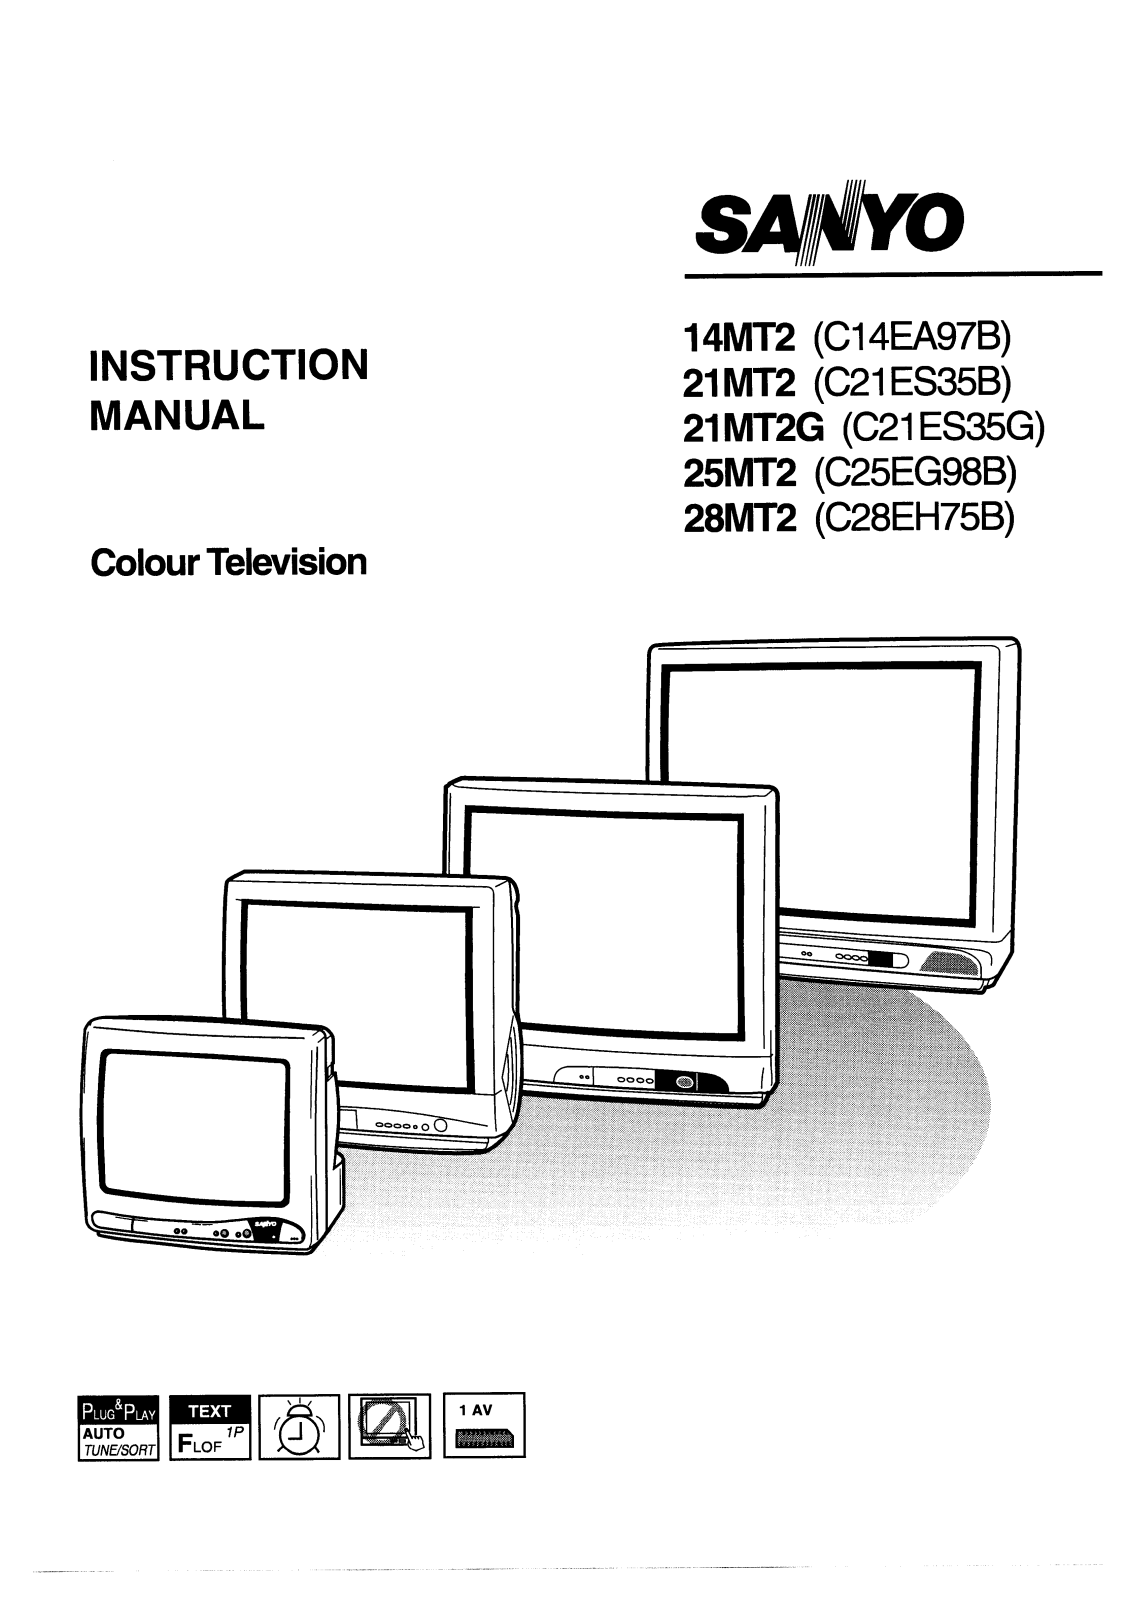 Sanyo 21MT2, 21MT2G, 25MT2, 28MT2 Instruction Manual